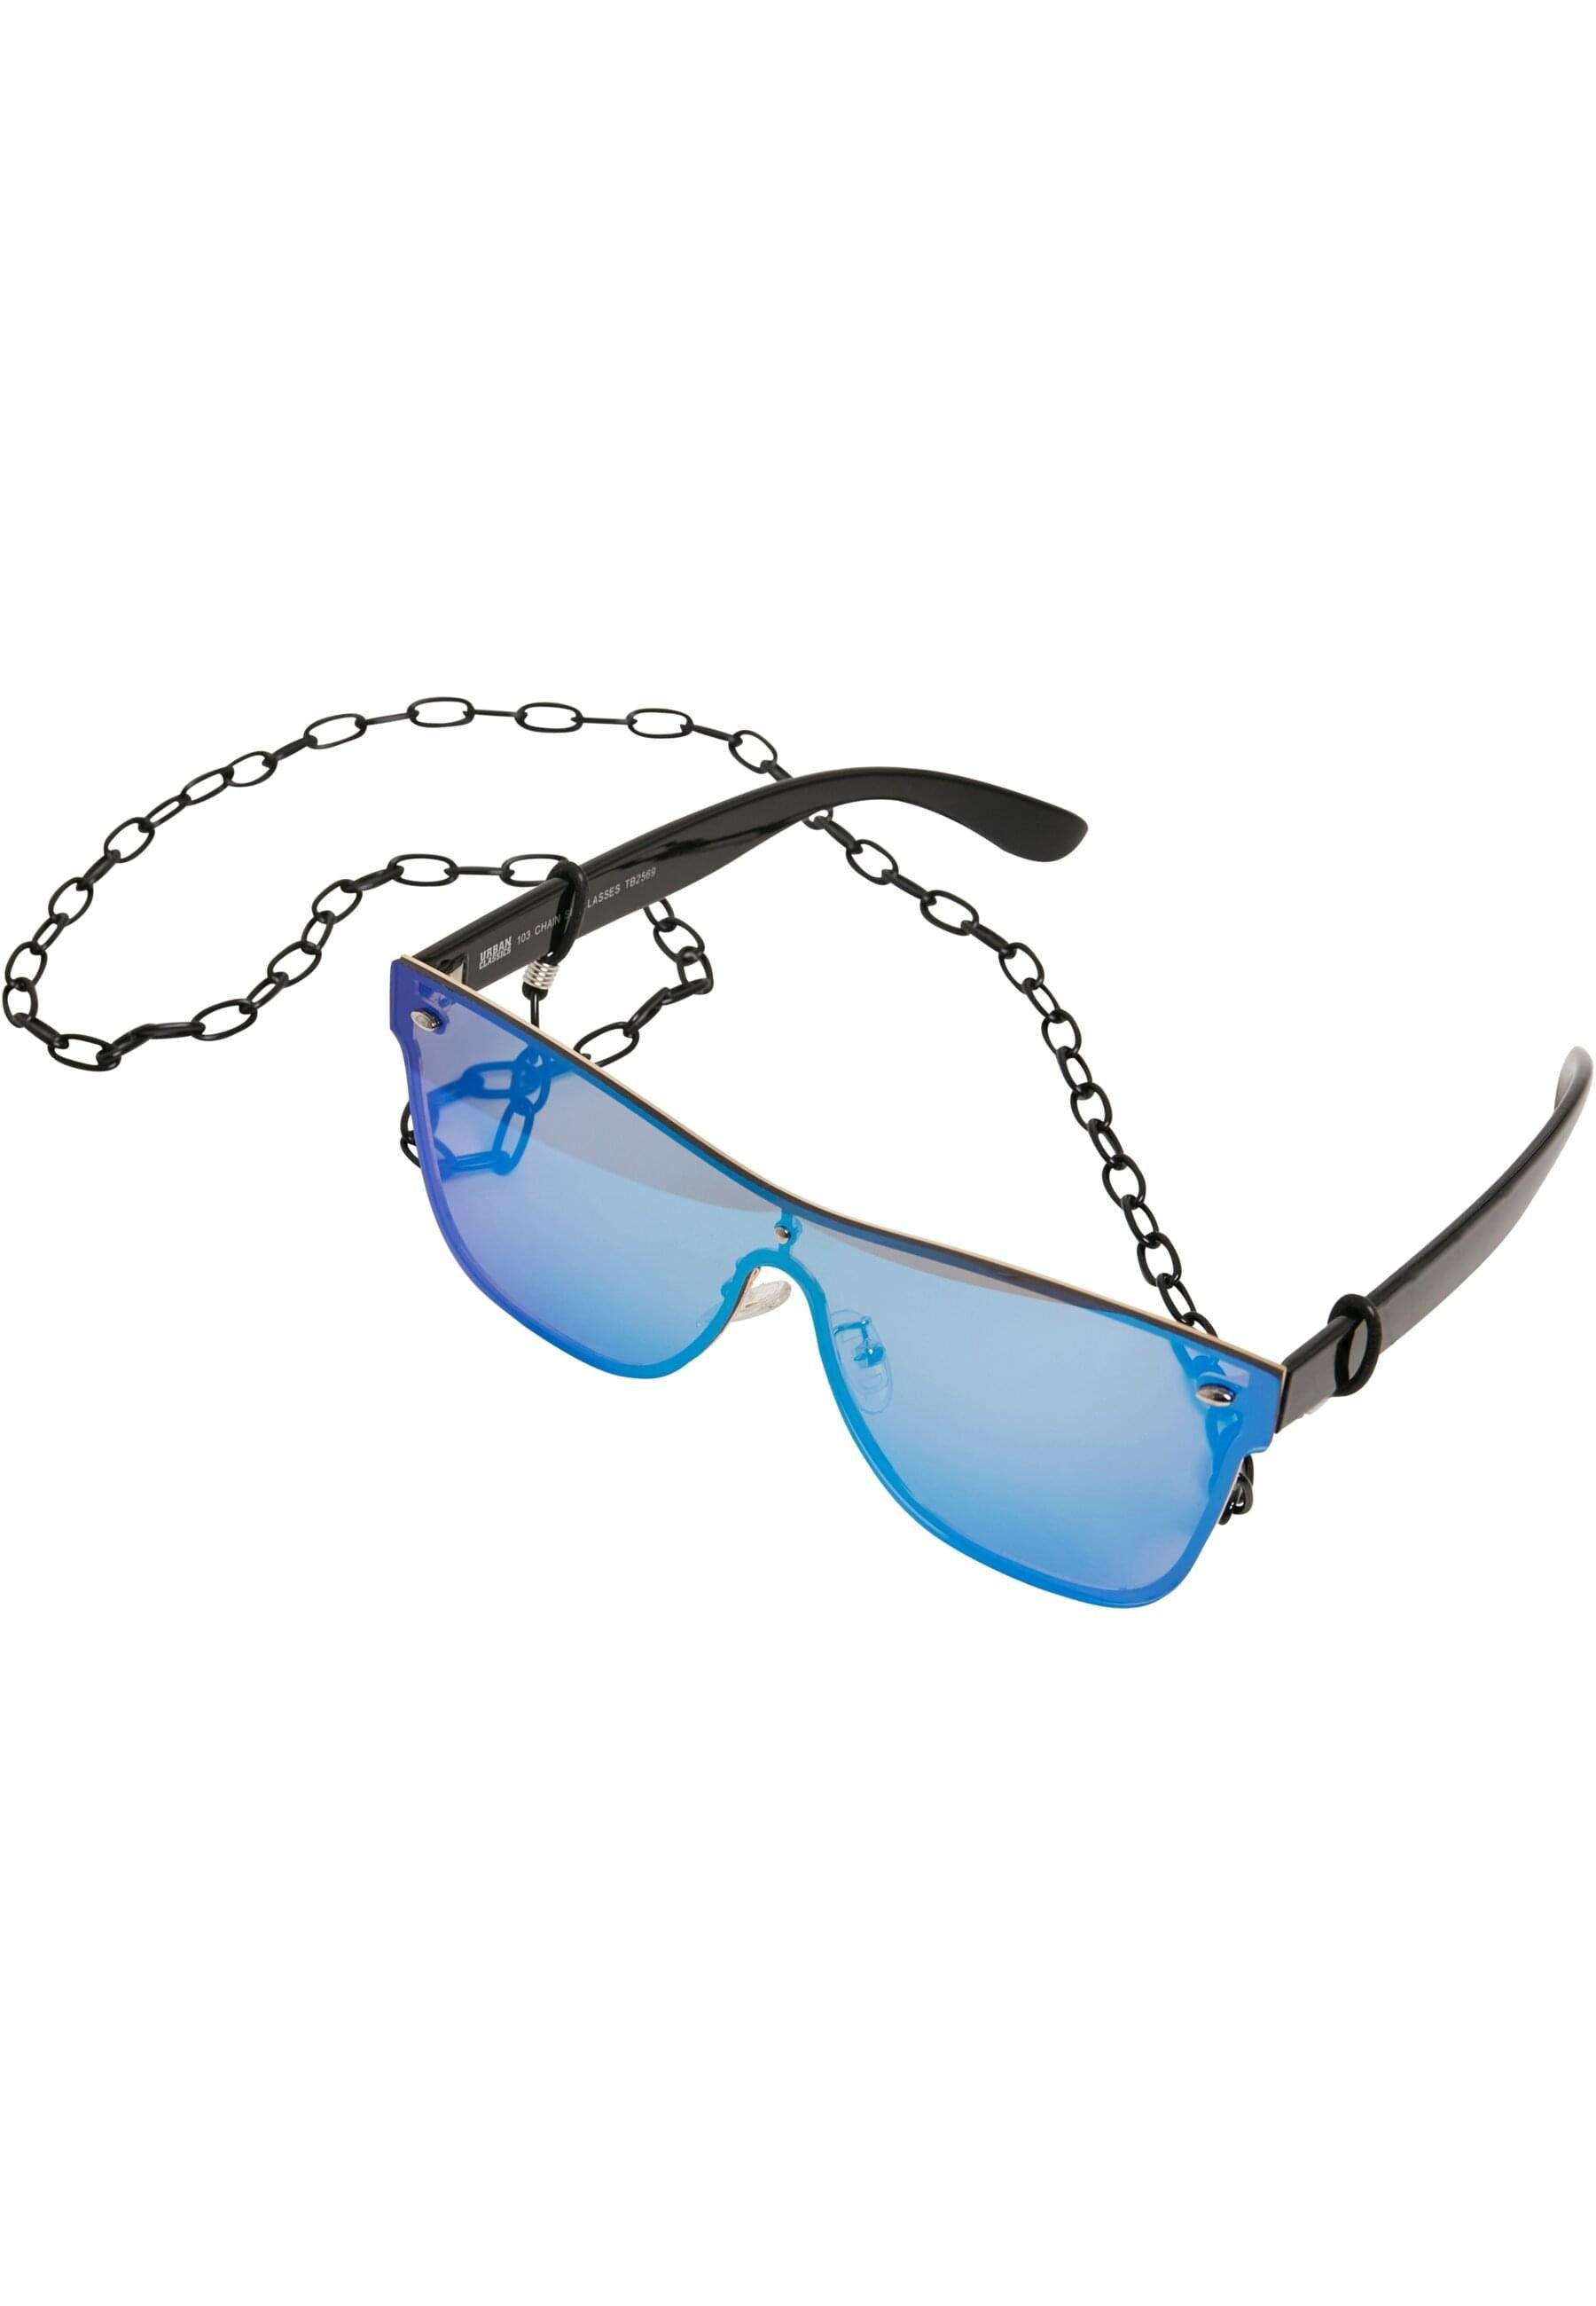 URBAN CLASSICS Sonnenbrille Unisex 103 Chain blk/blue Sunglasses